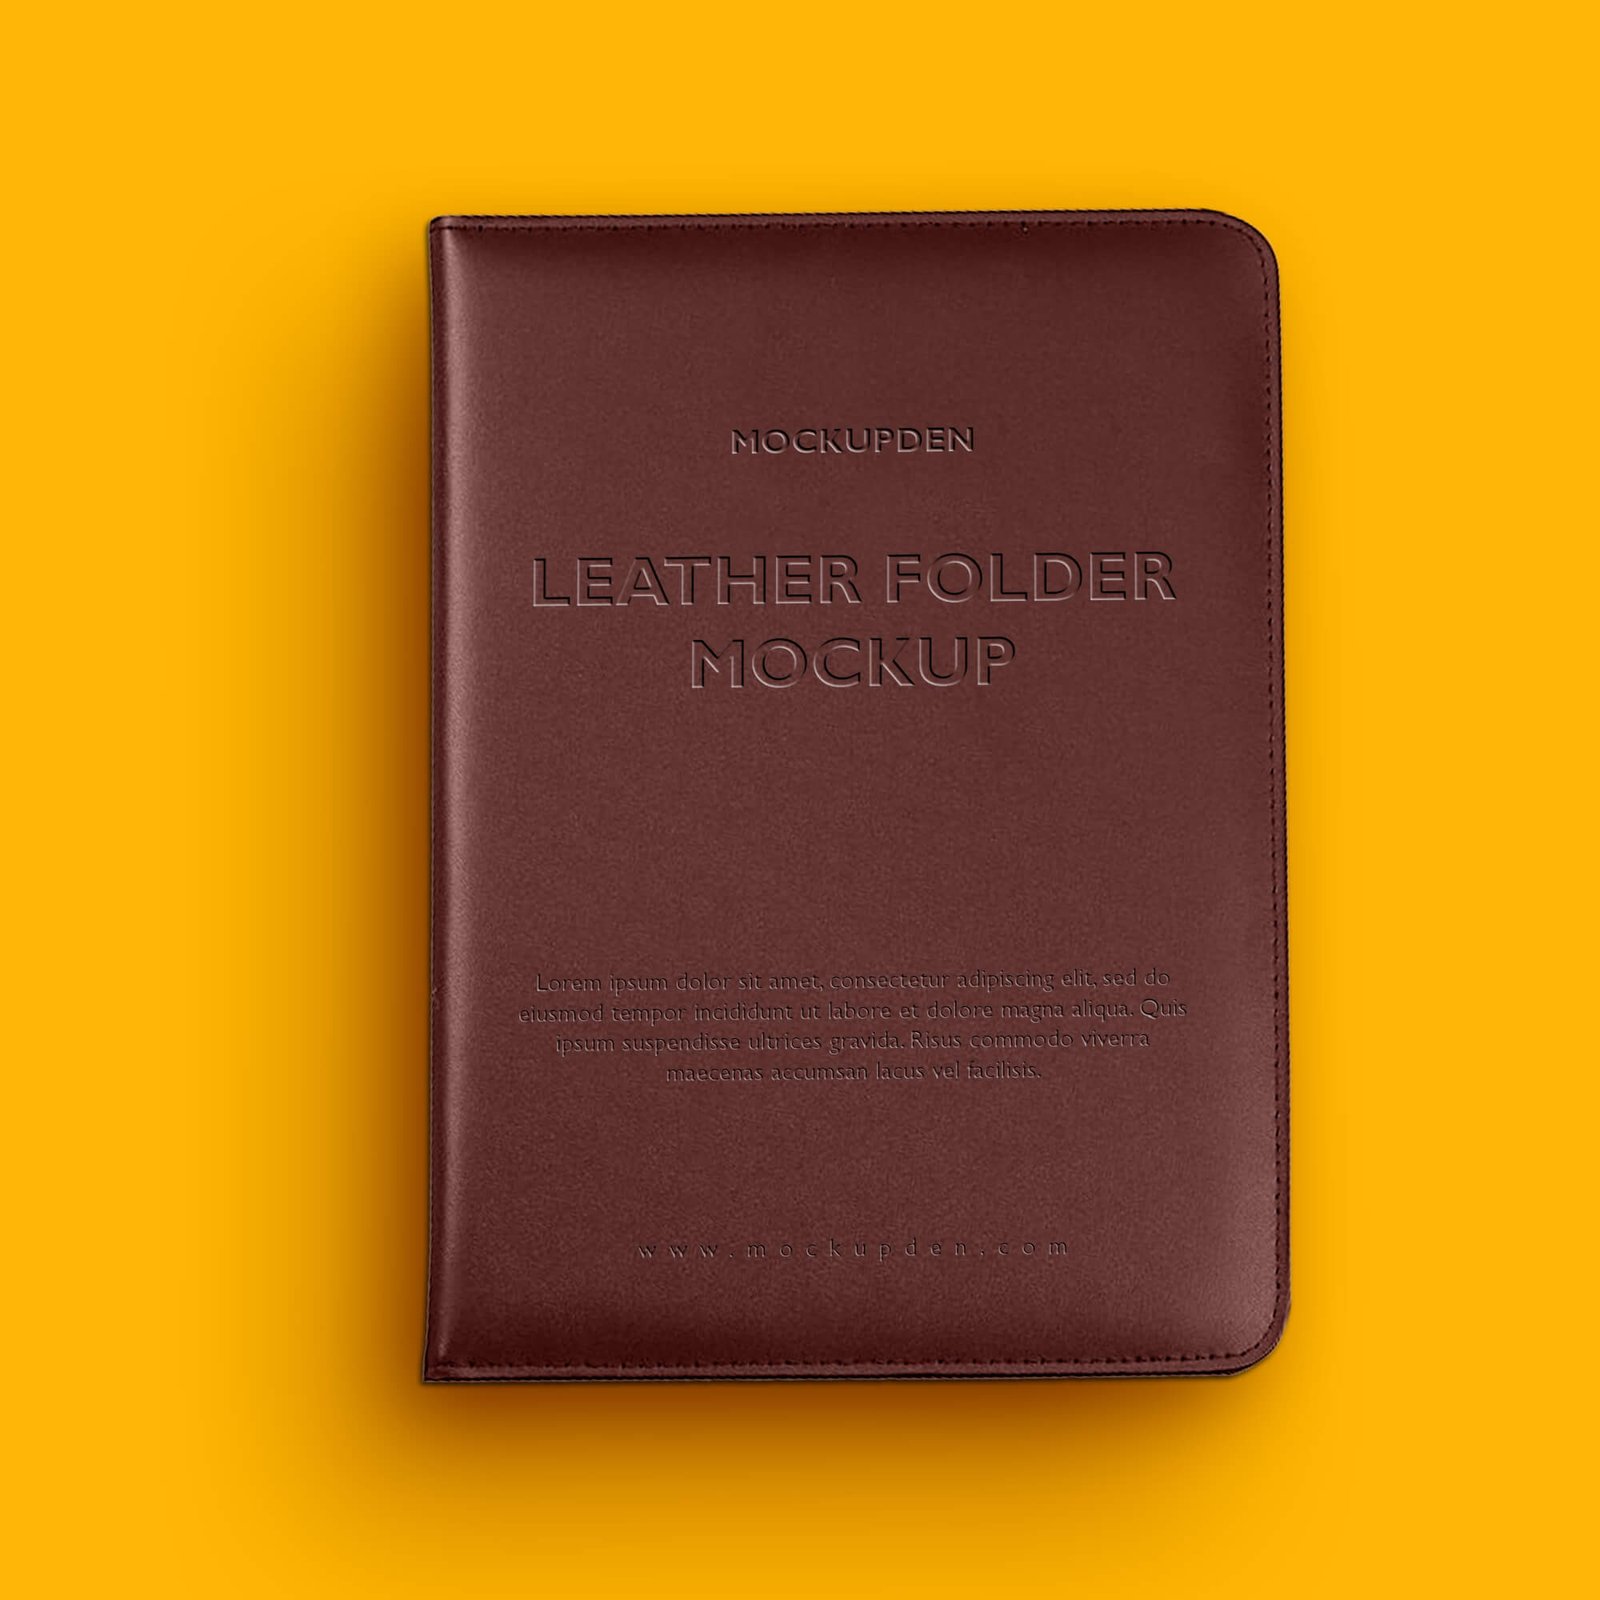 Design Free Leather Folder Mockup PSD Template